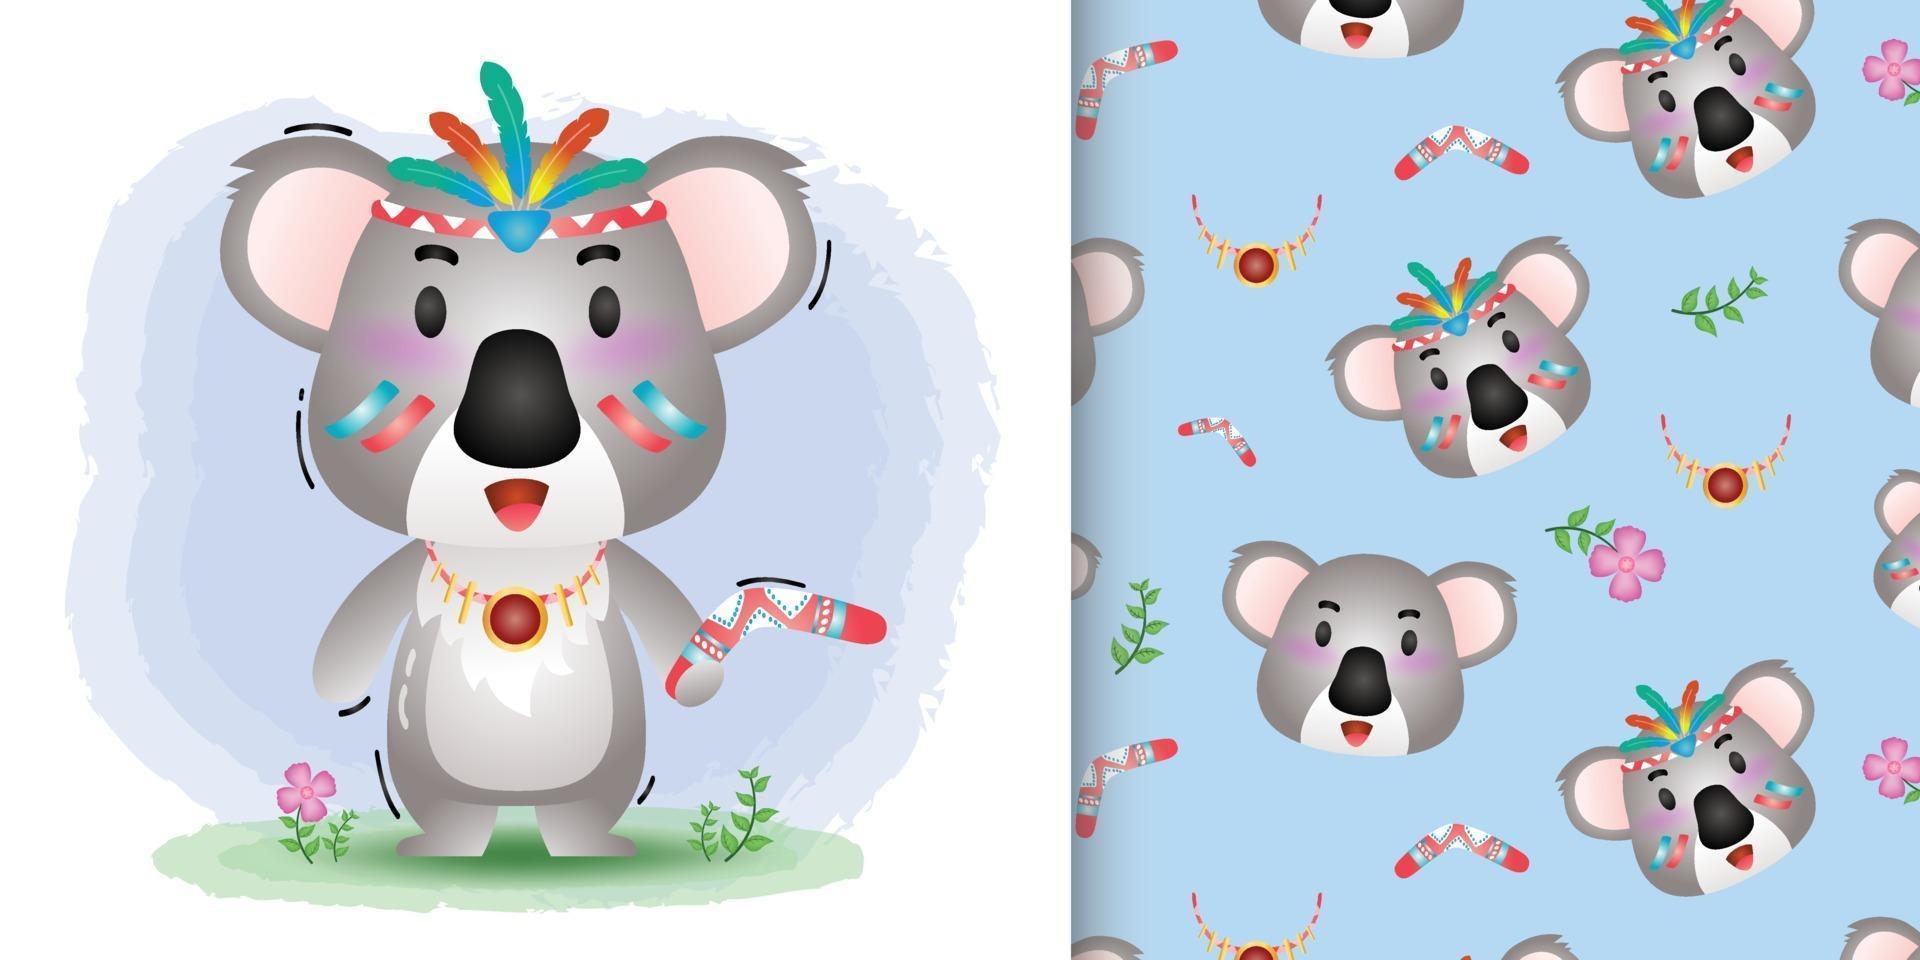 Cute koala with aborigine costume seamless pattern and illustration designs vector